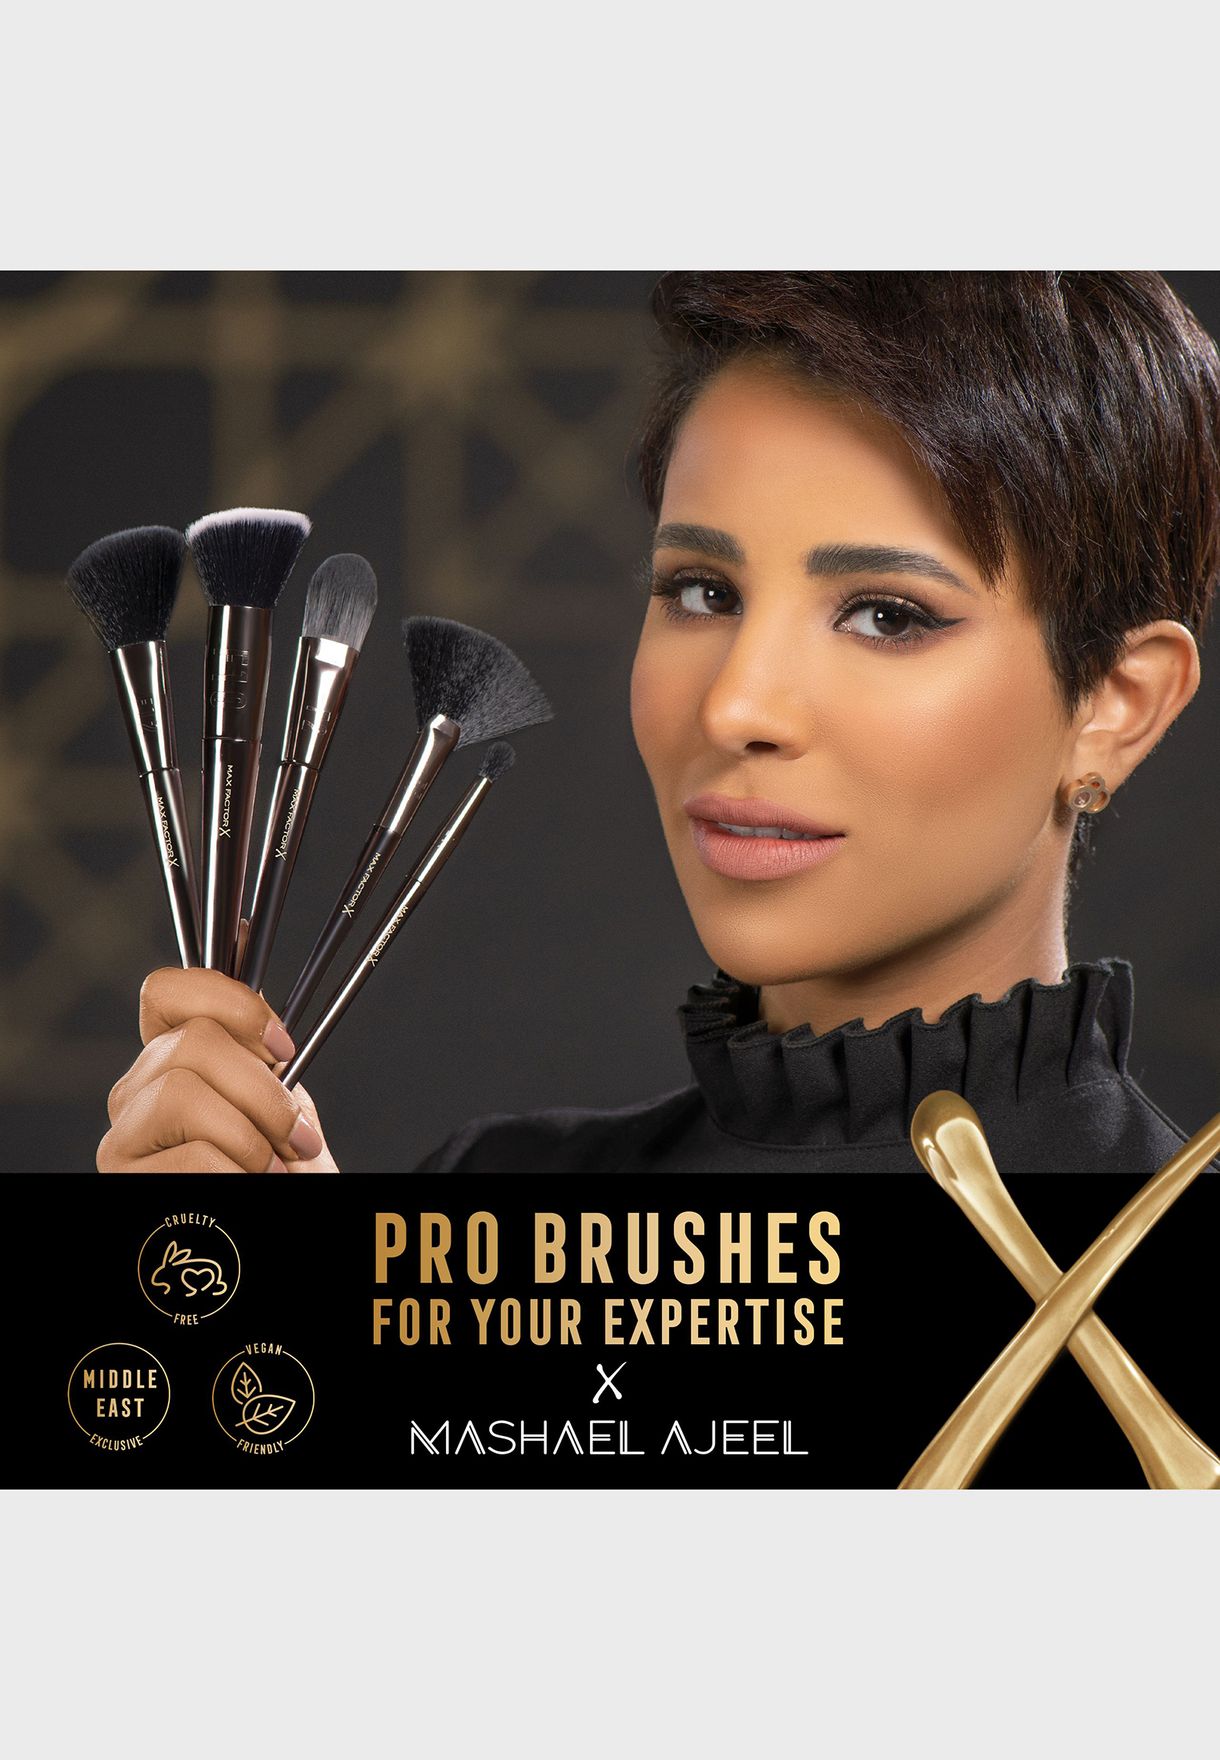 Pro Powder & Blush Brush F12 by Mashael Ajeel